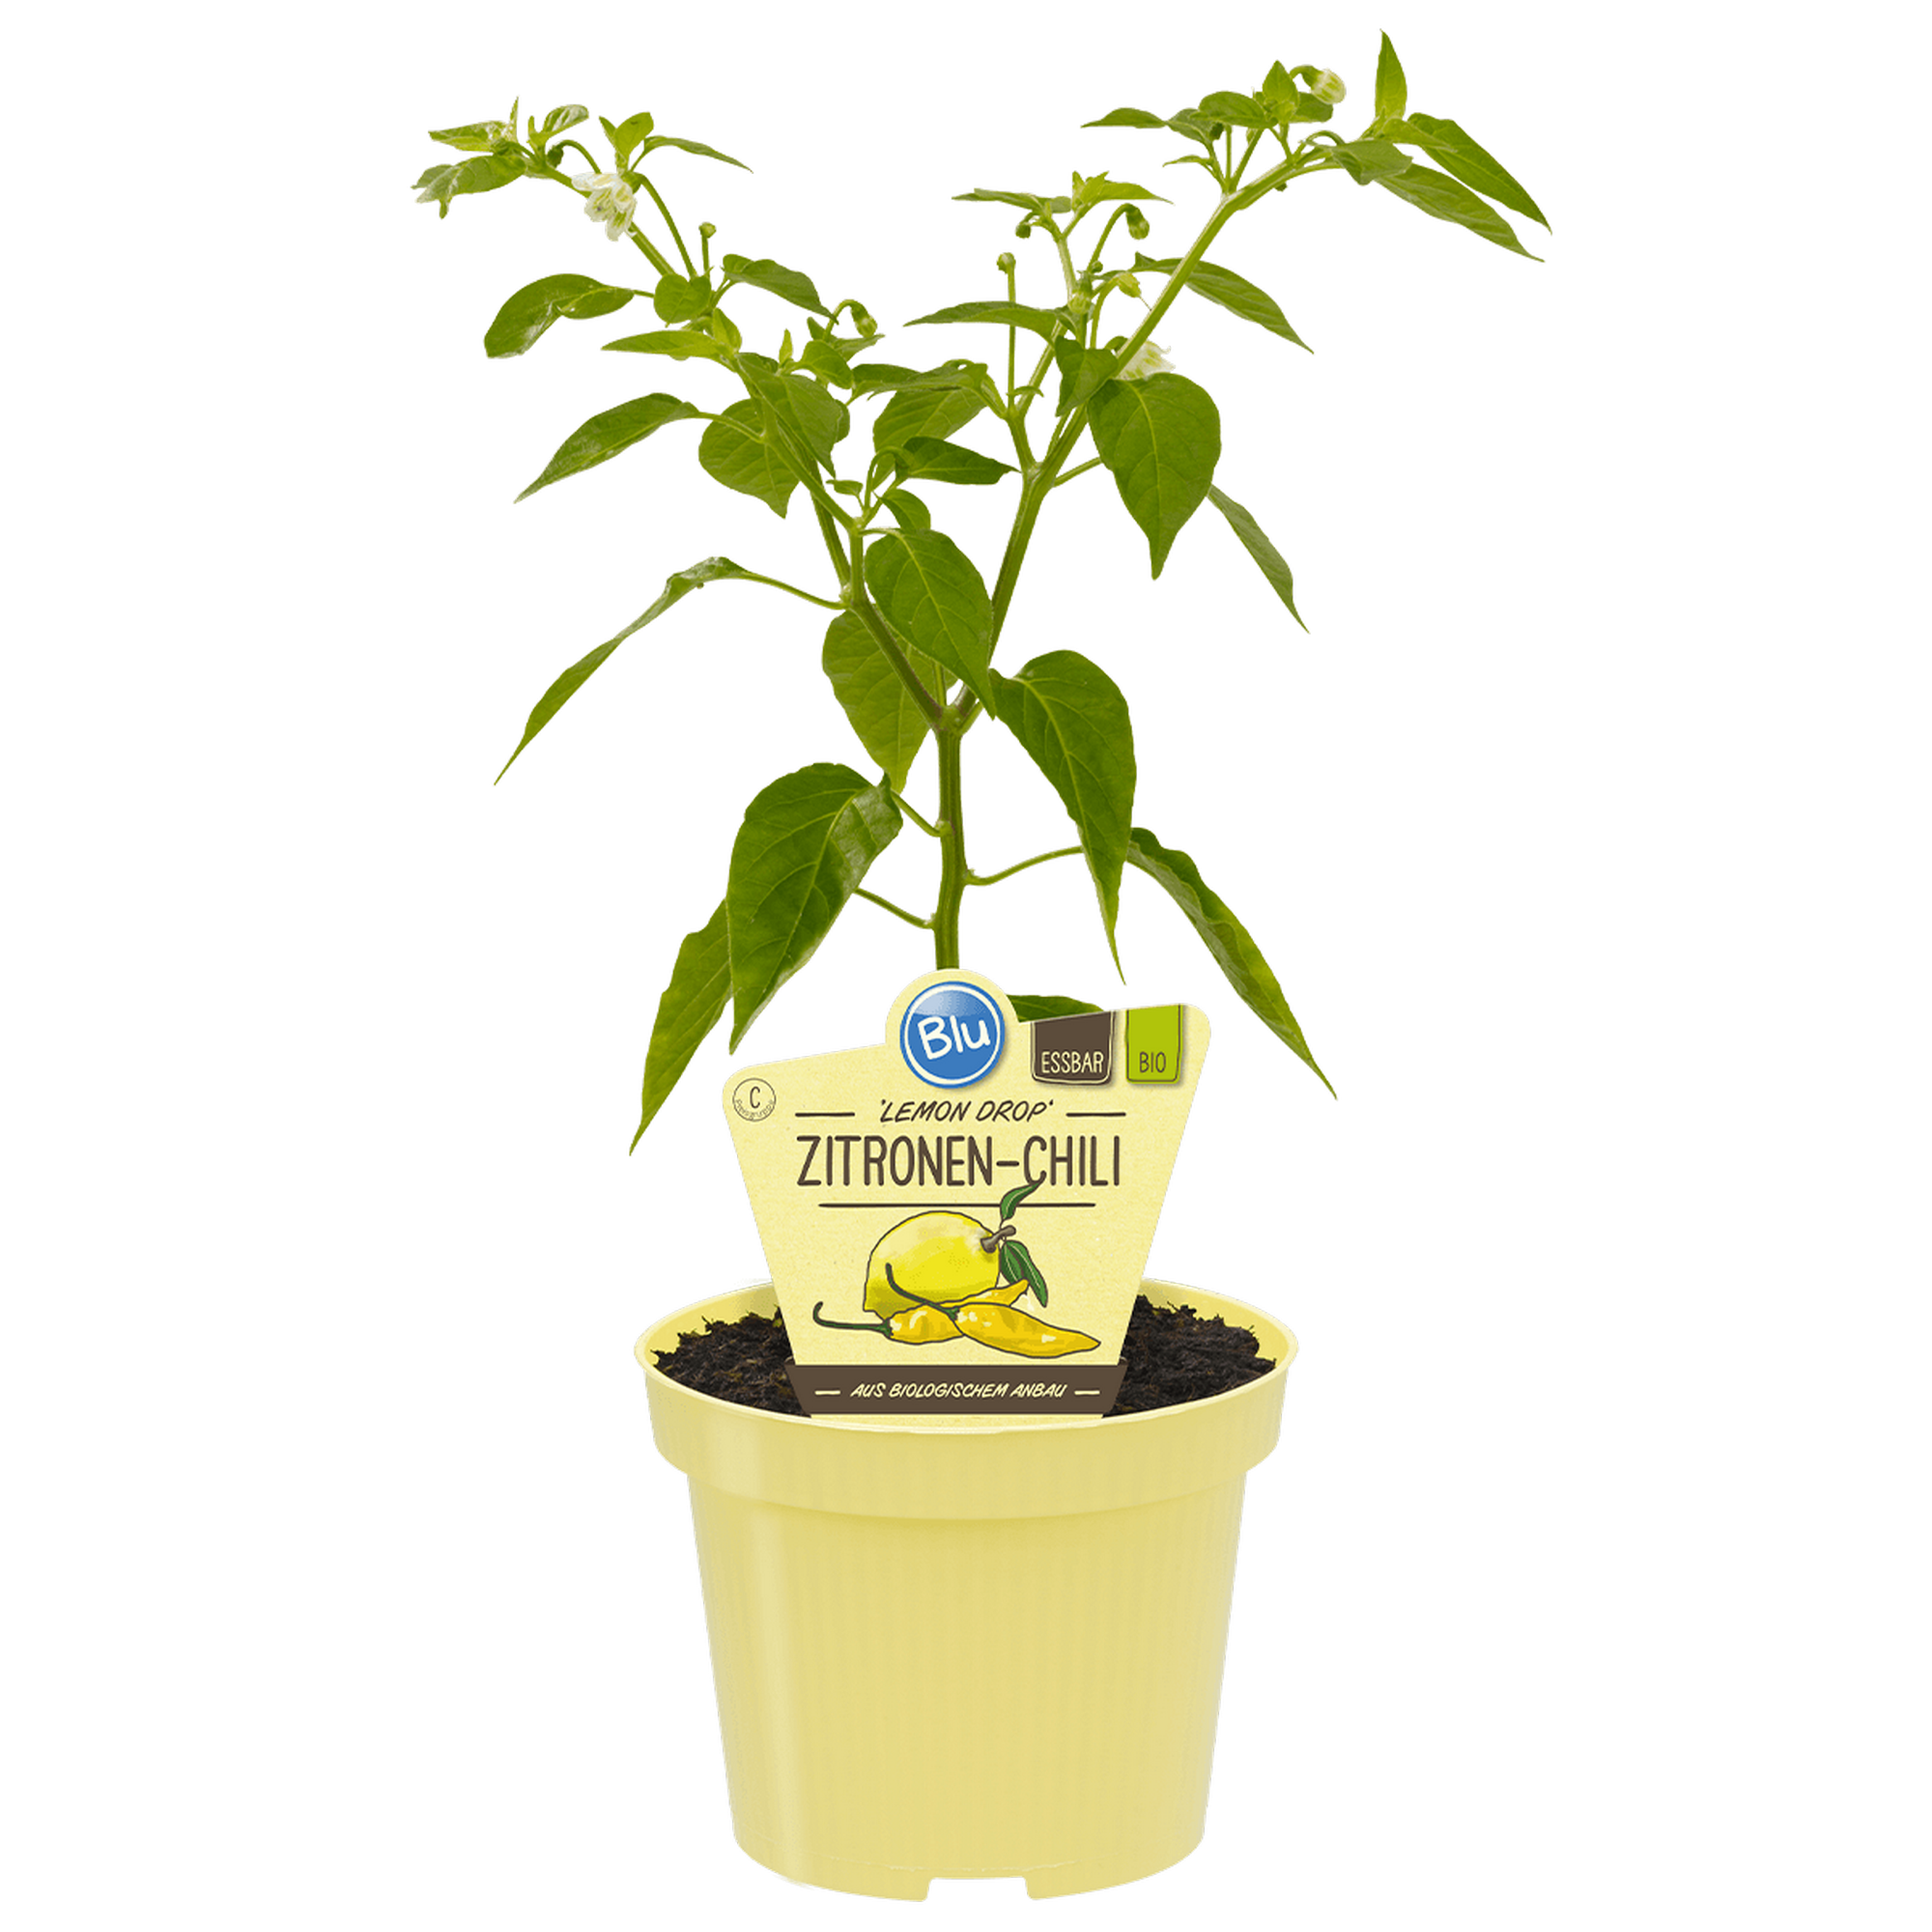 Bio-Zitronen-Chili 'Lemon Drop' 12 cm Topf + product picture